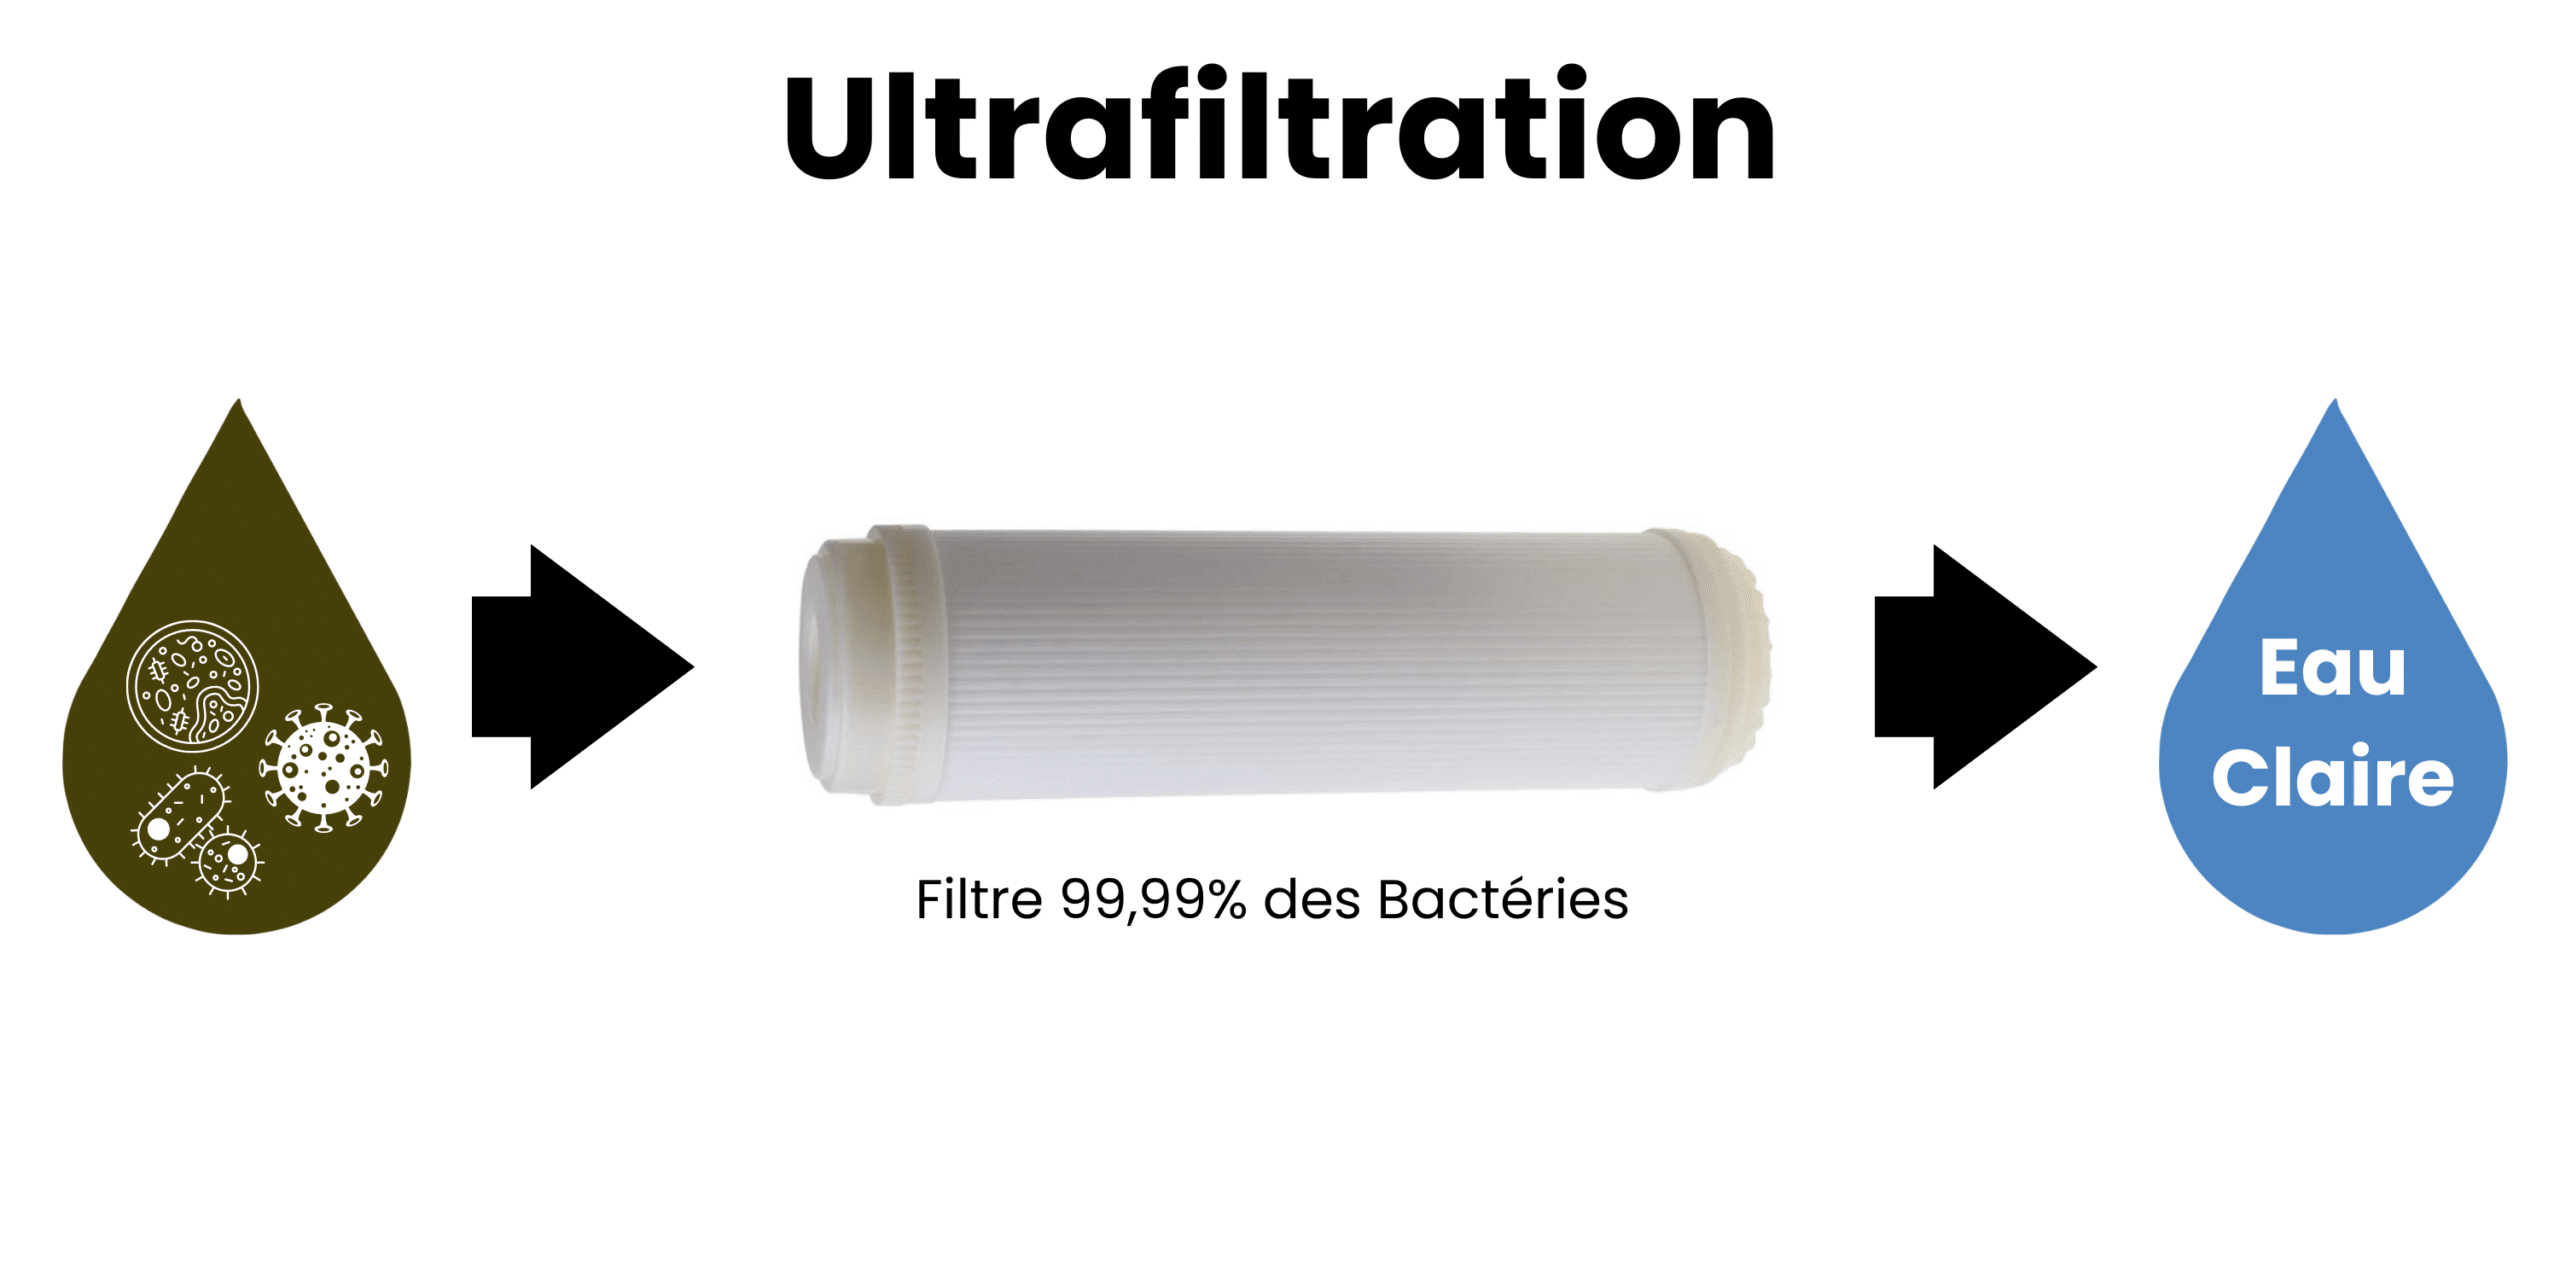 Ultrafiltration de l'eau shema